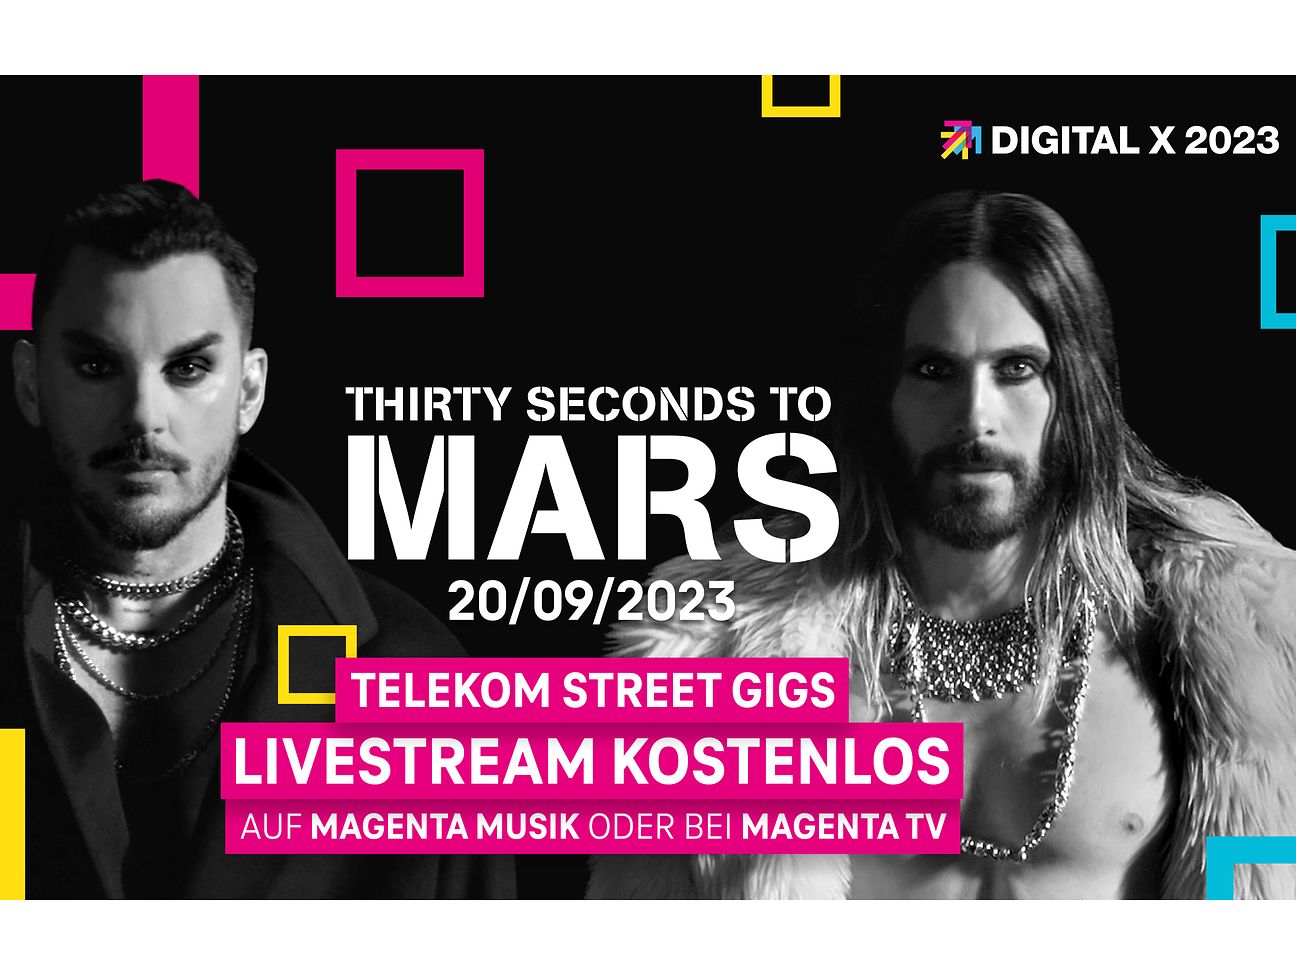 new to album | Deutsche exclusive Digital X: Telekom Seconds to Thirty Mars present